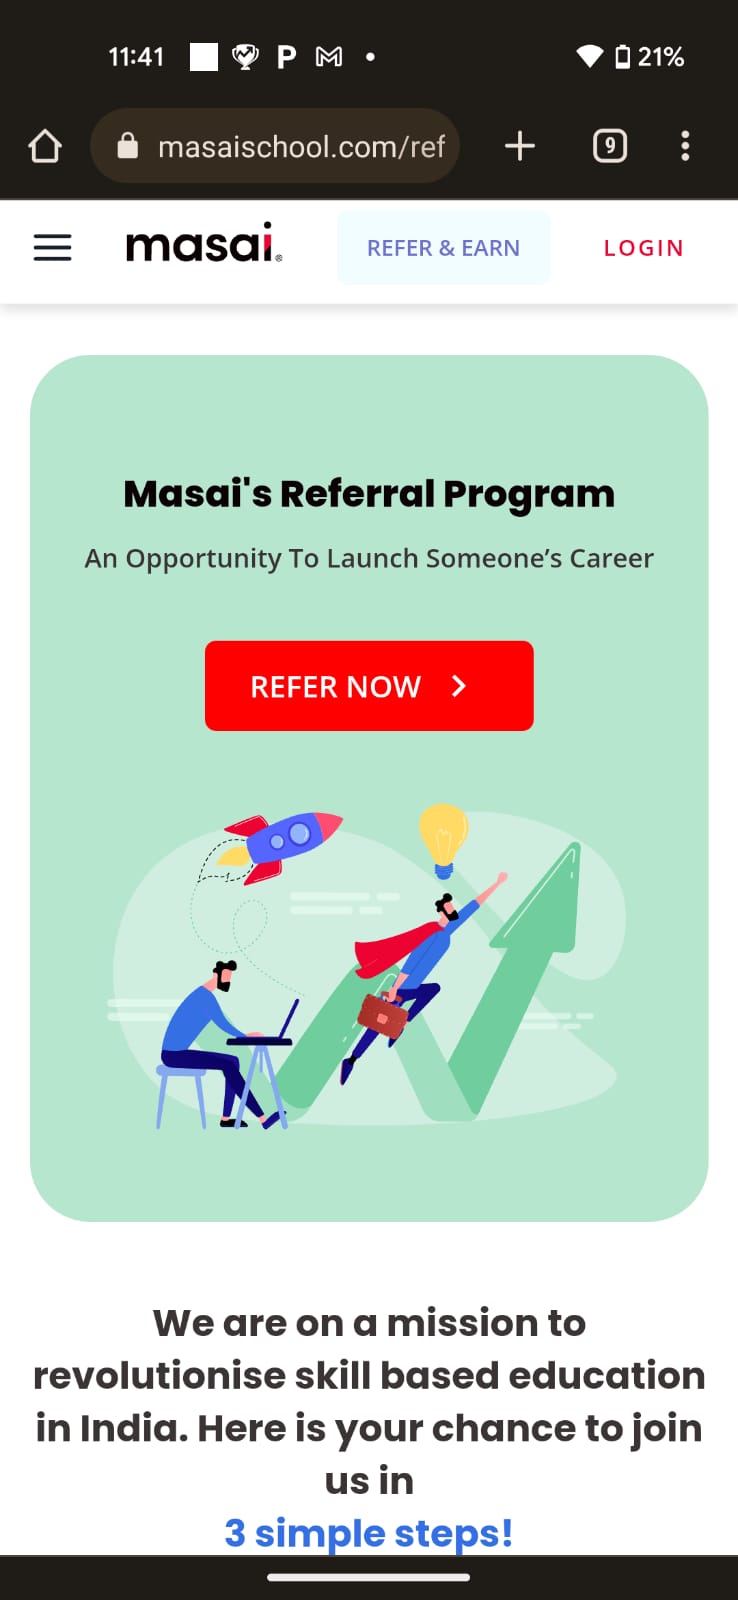 masai-school-referral-program